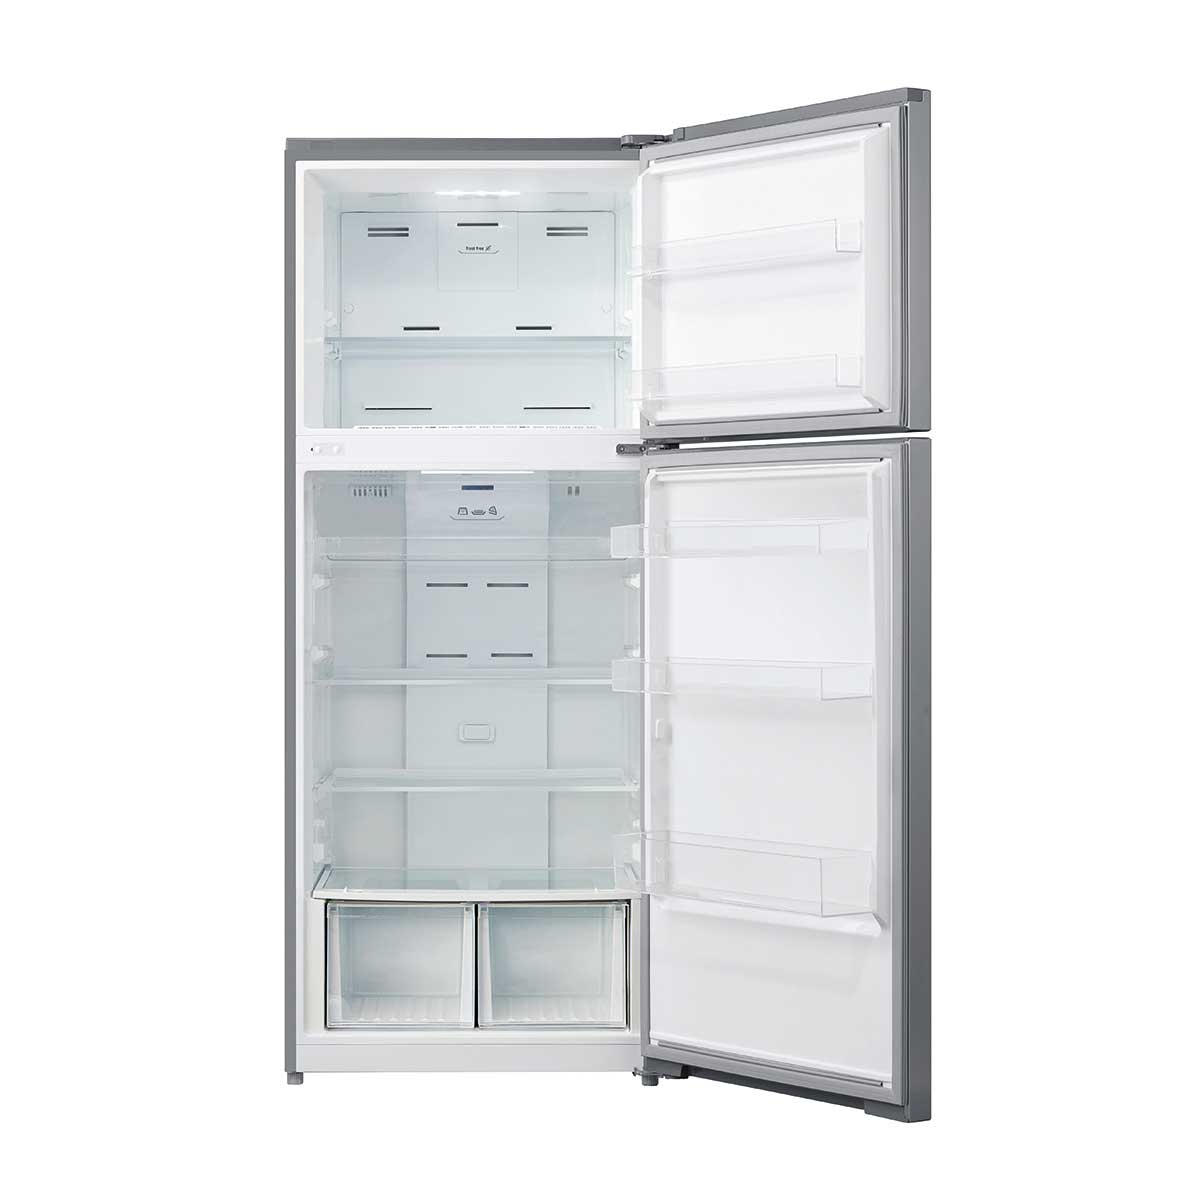 geladeira-midea-frost-free-2-portas-md-rt453fga041-425-l-inox-110v-3.jpg